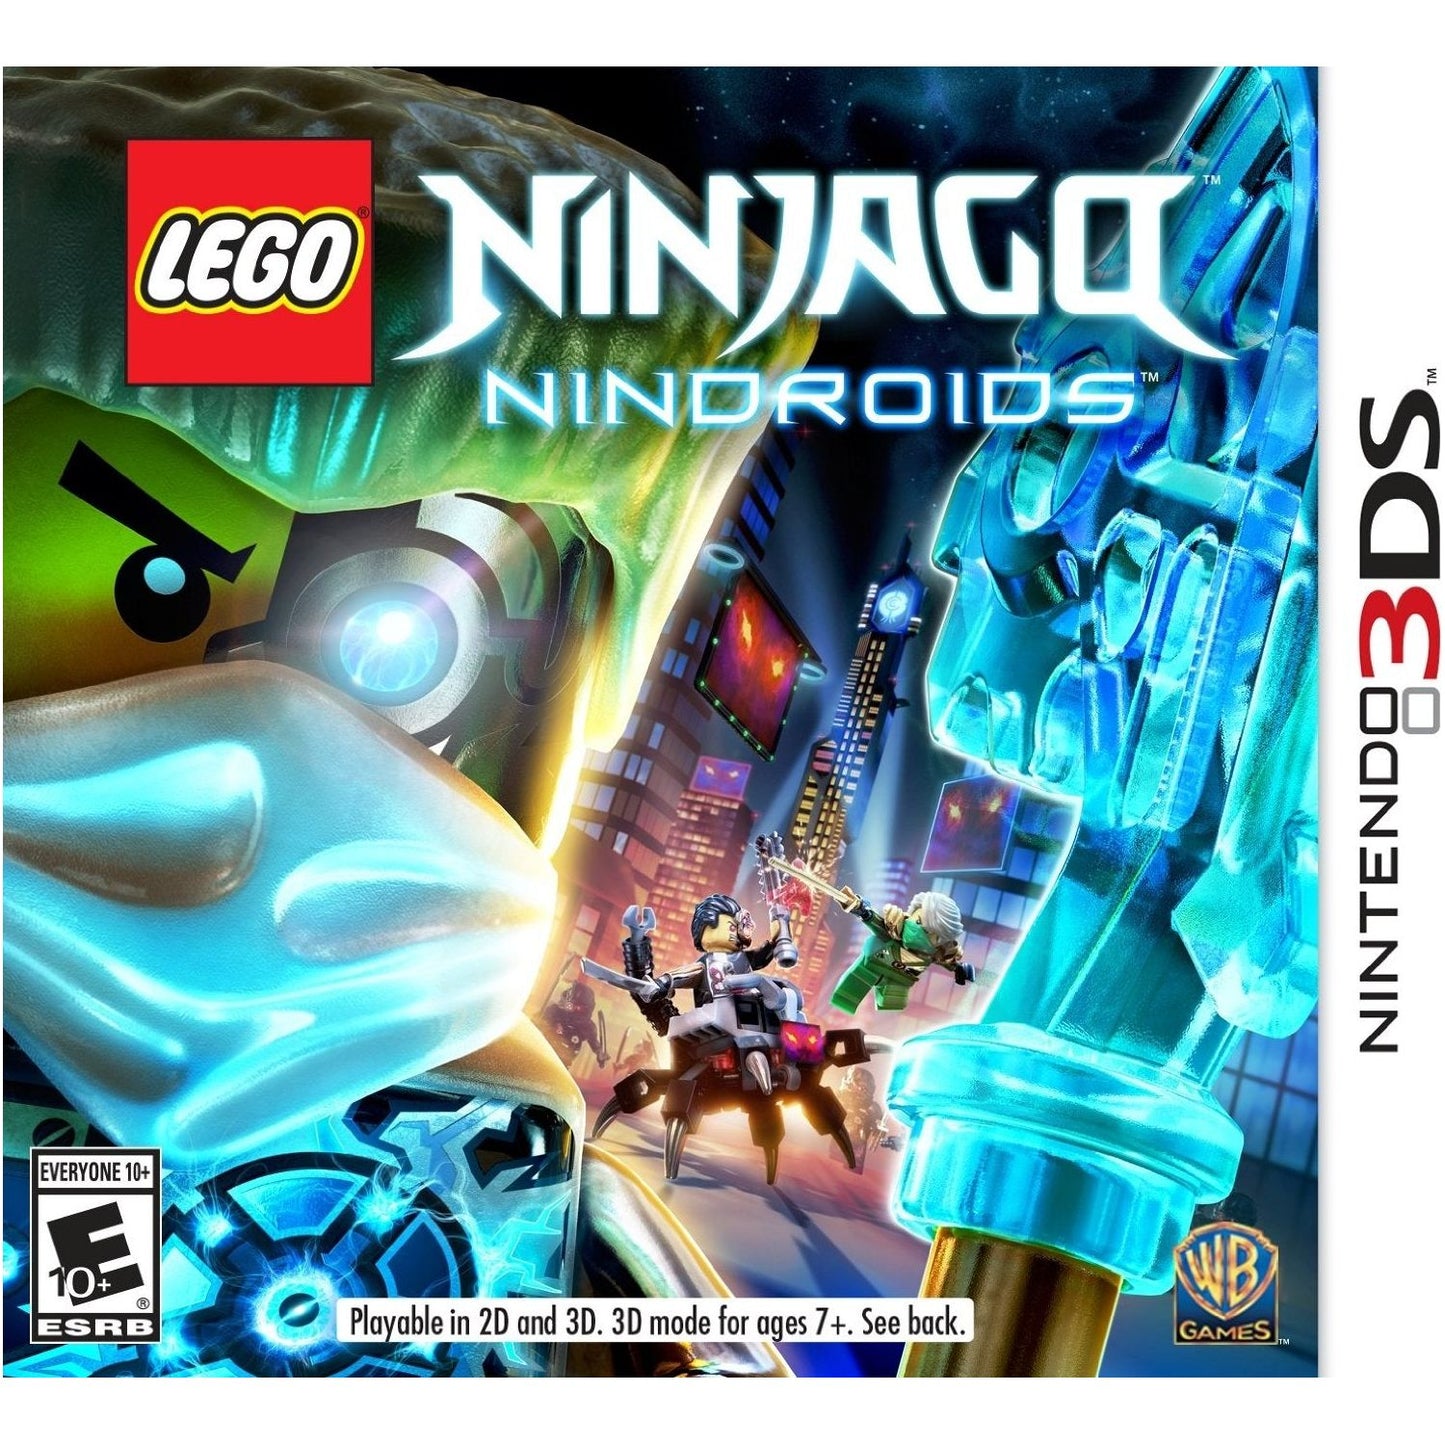 LEGO NINJAGO NINDROIDS (used)